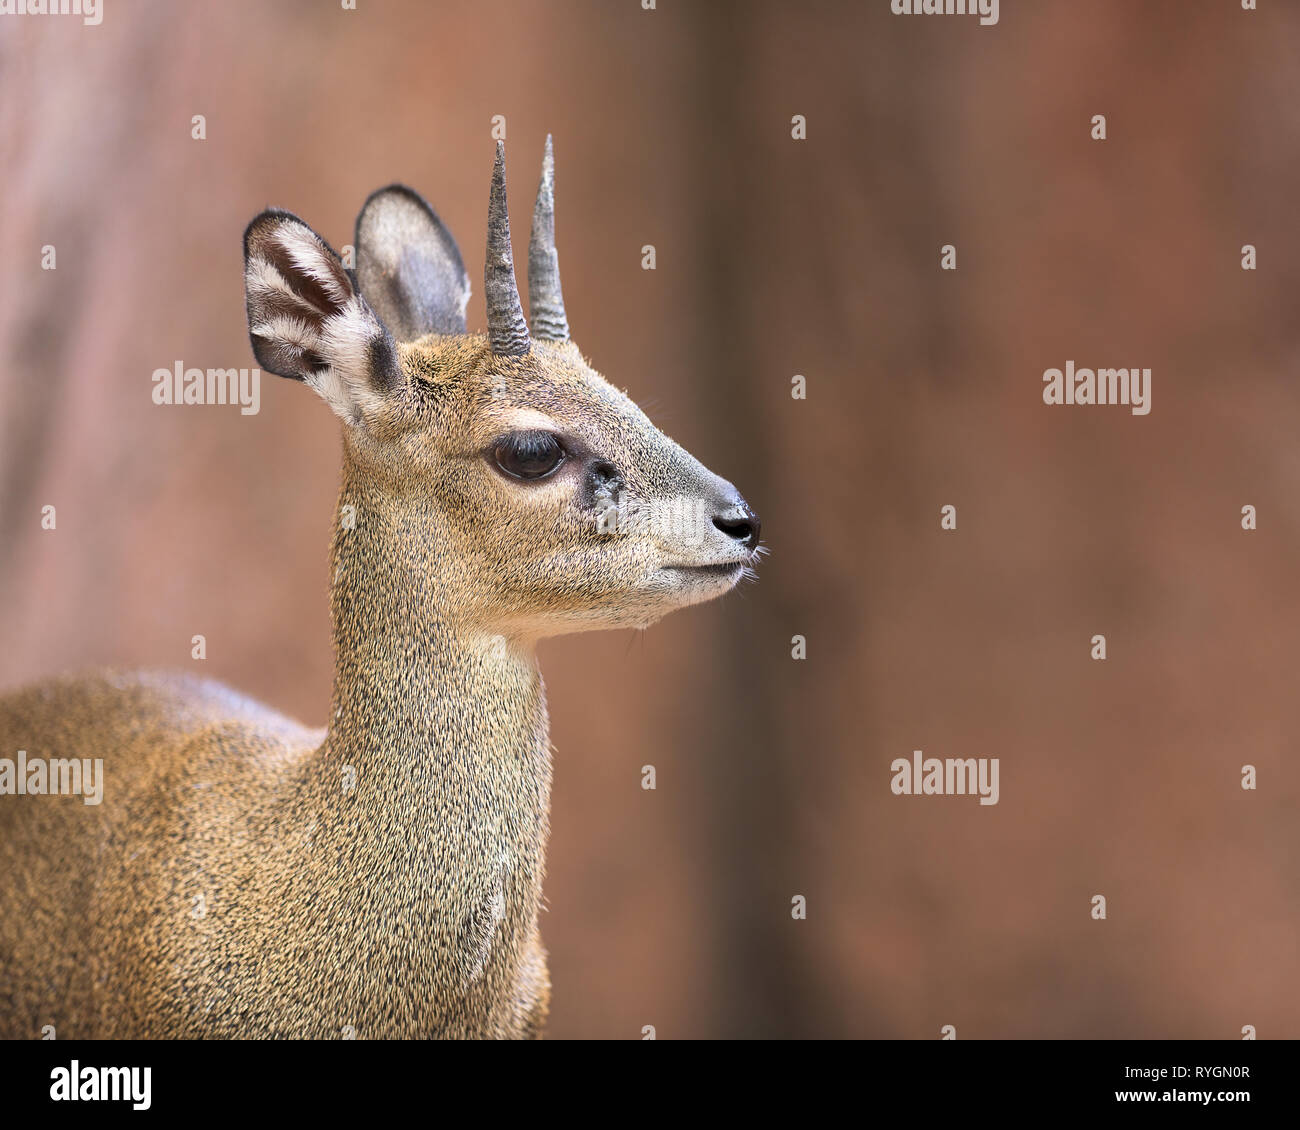 Klippspringer (Oreotragus oreotragus) oder eine kleine Antilope Closeup Portrait Stockfoto